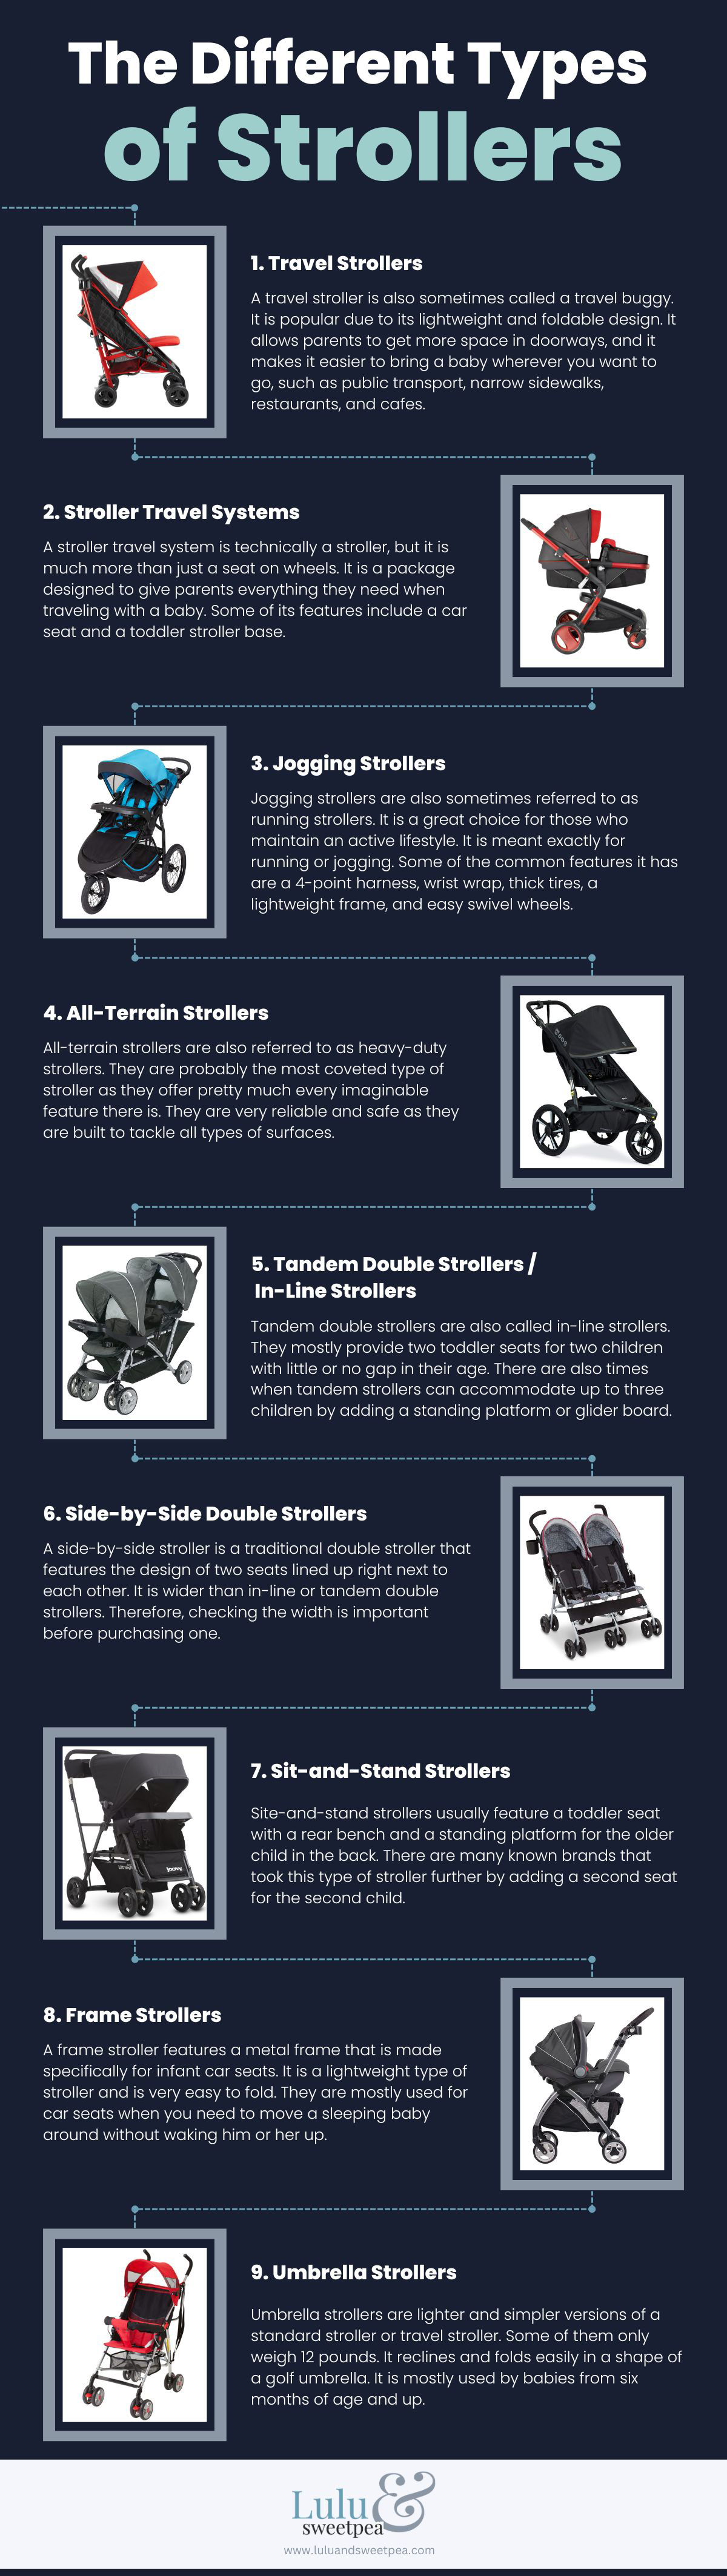 Types of Stroller